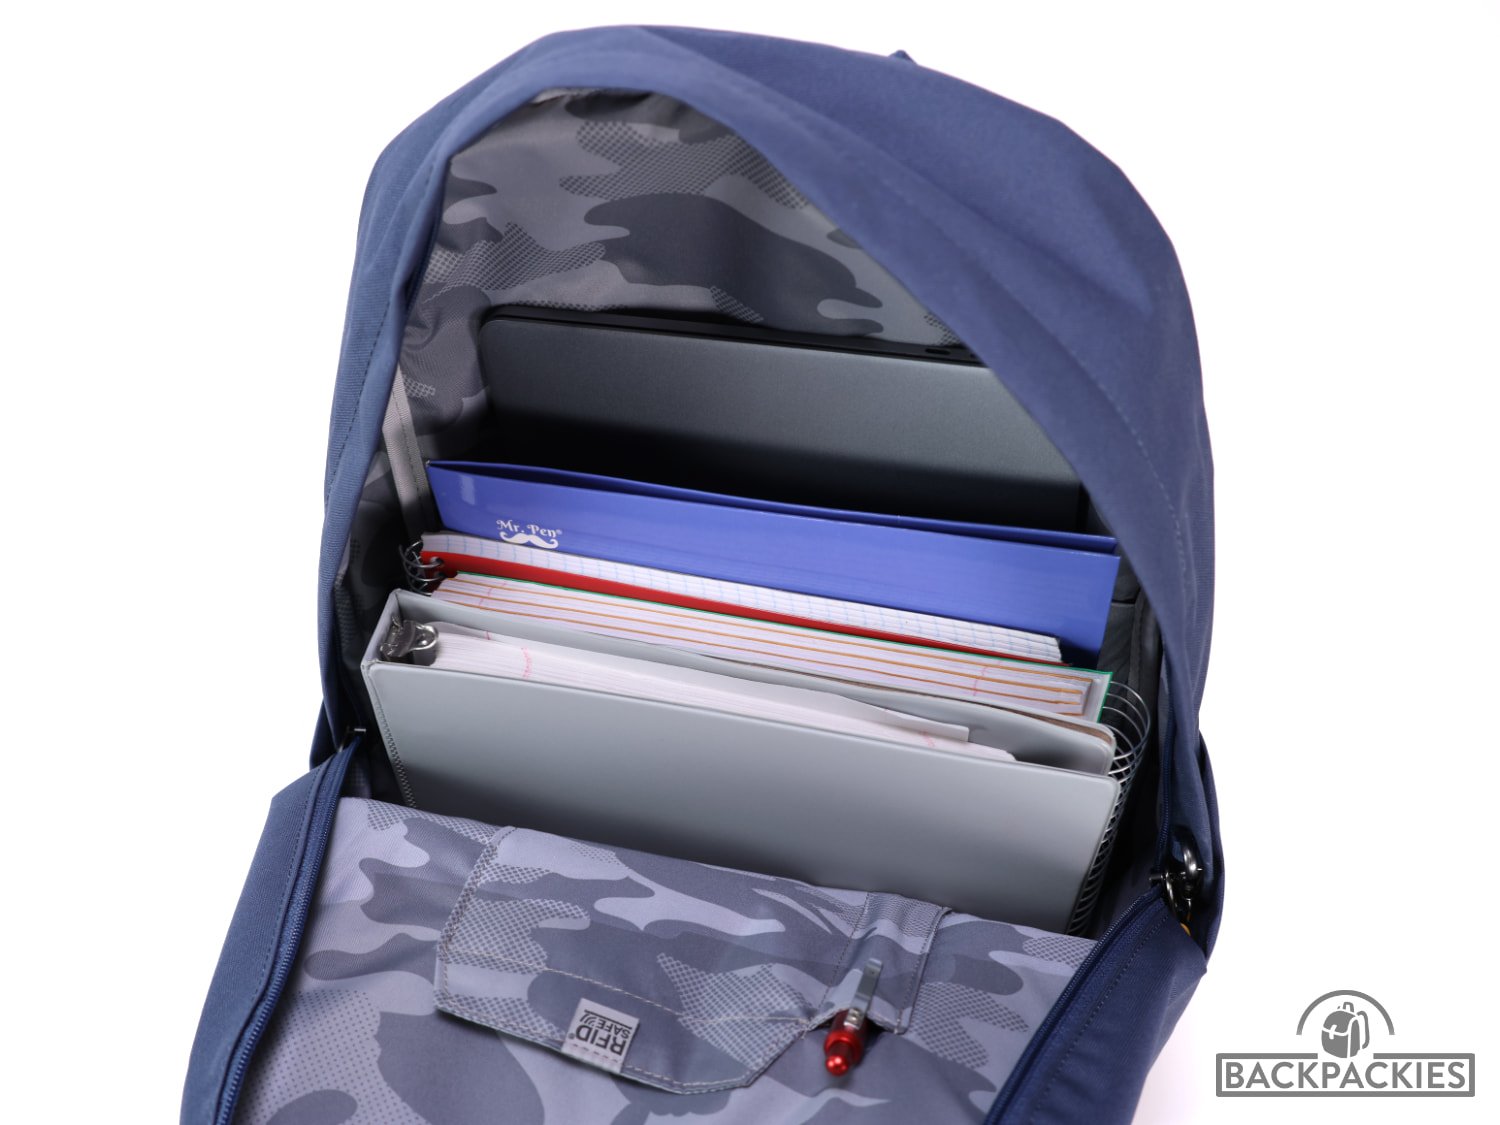 Inside the Pacsafe Go 25L backpack